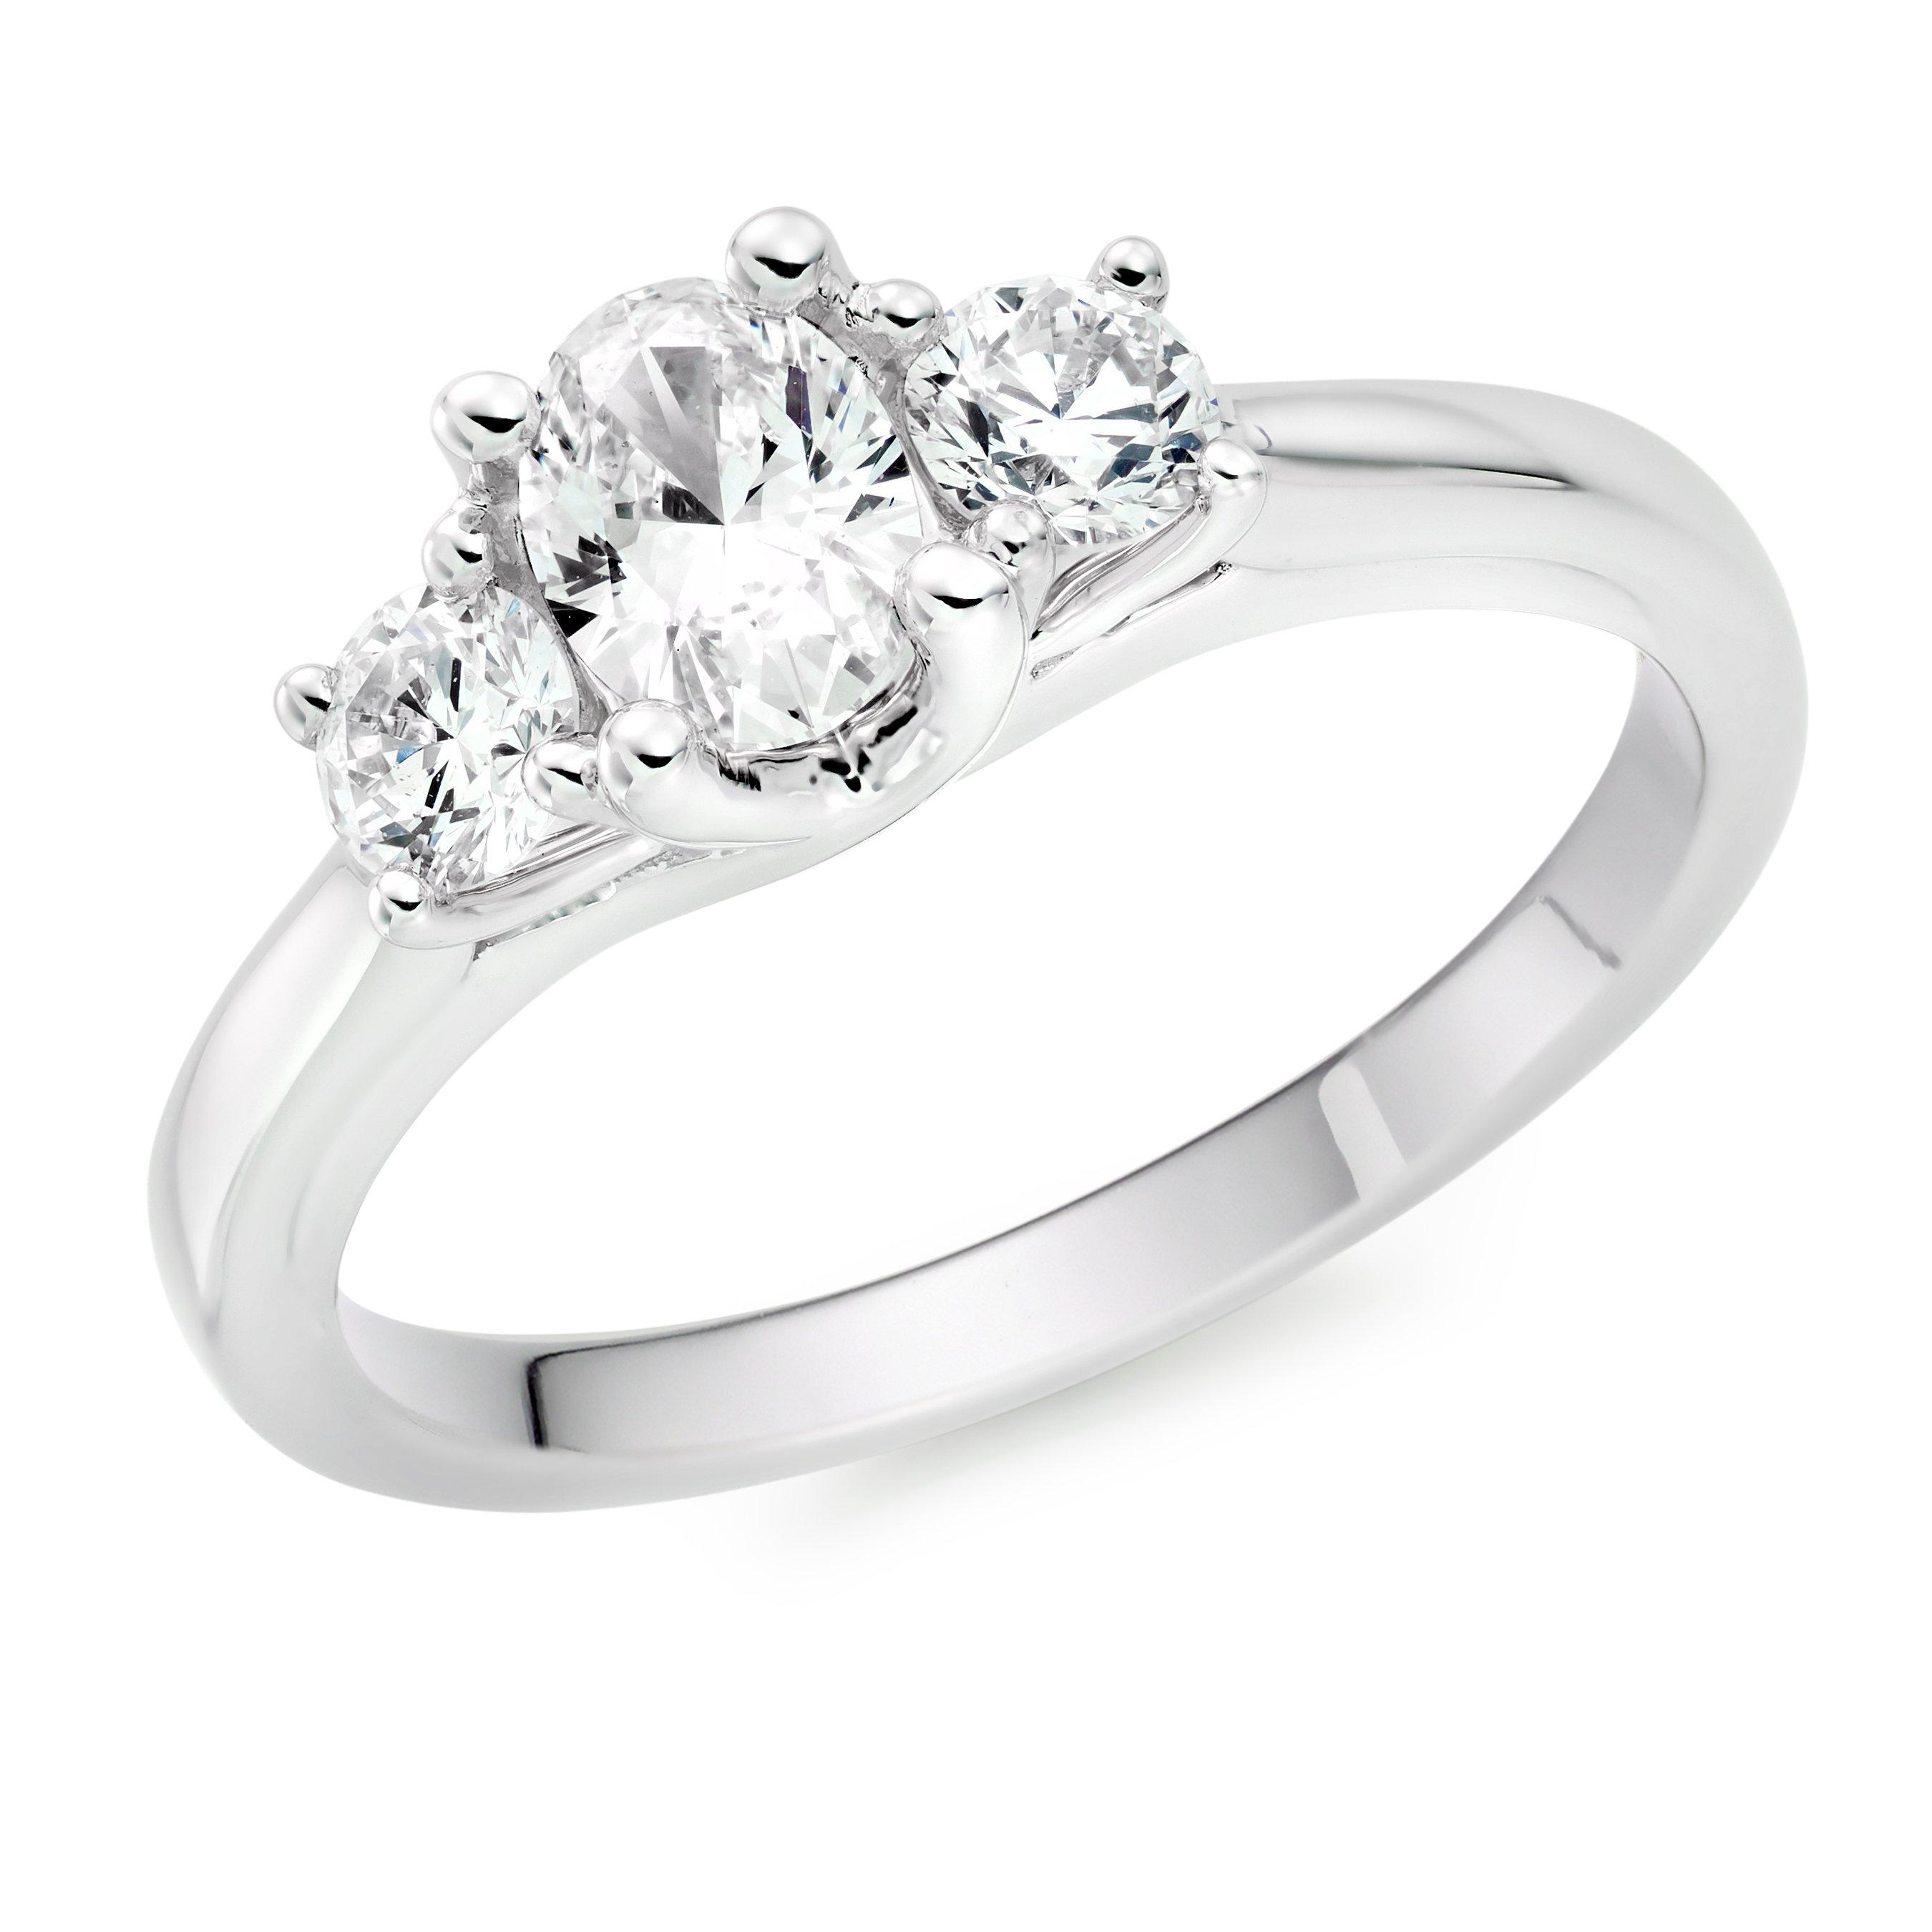 Platinum Three Stone Diamond Ring | 0131961 | Beaverbrooks the Jewellers